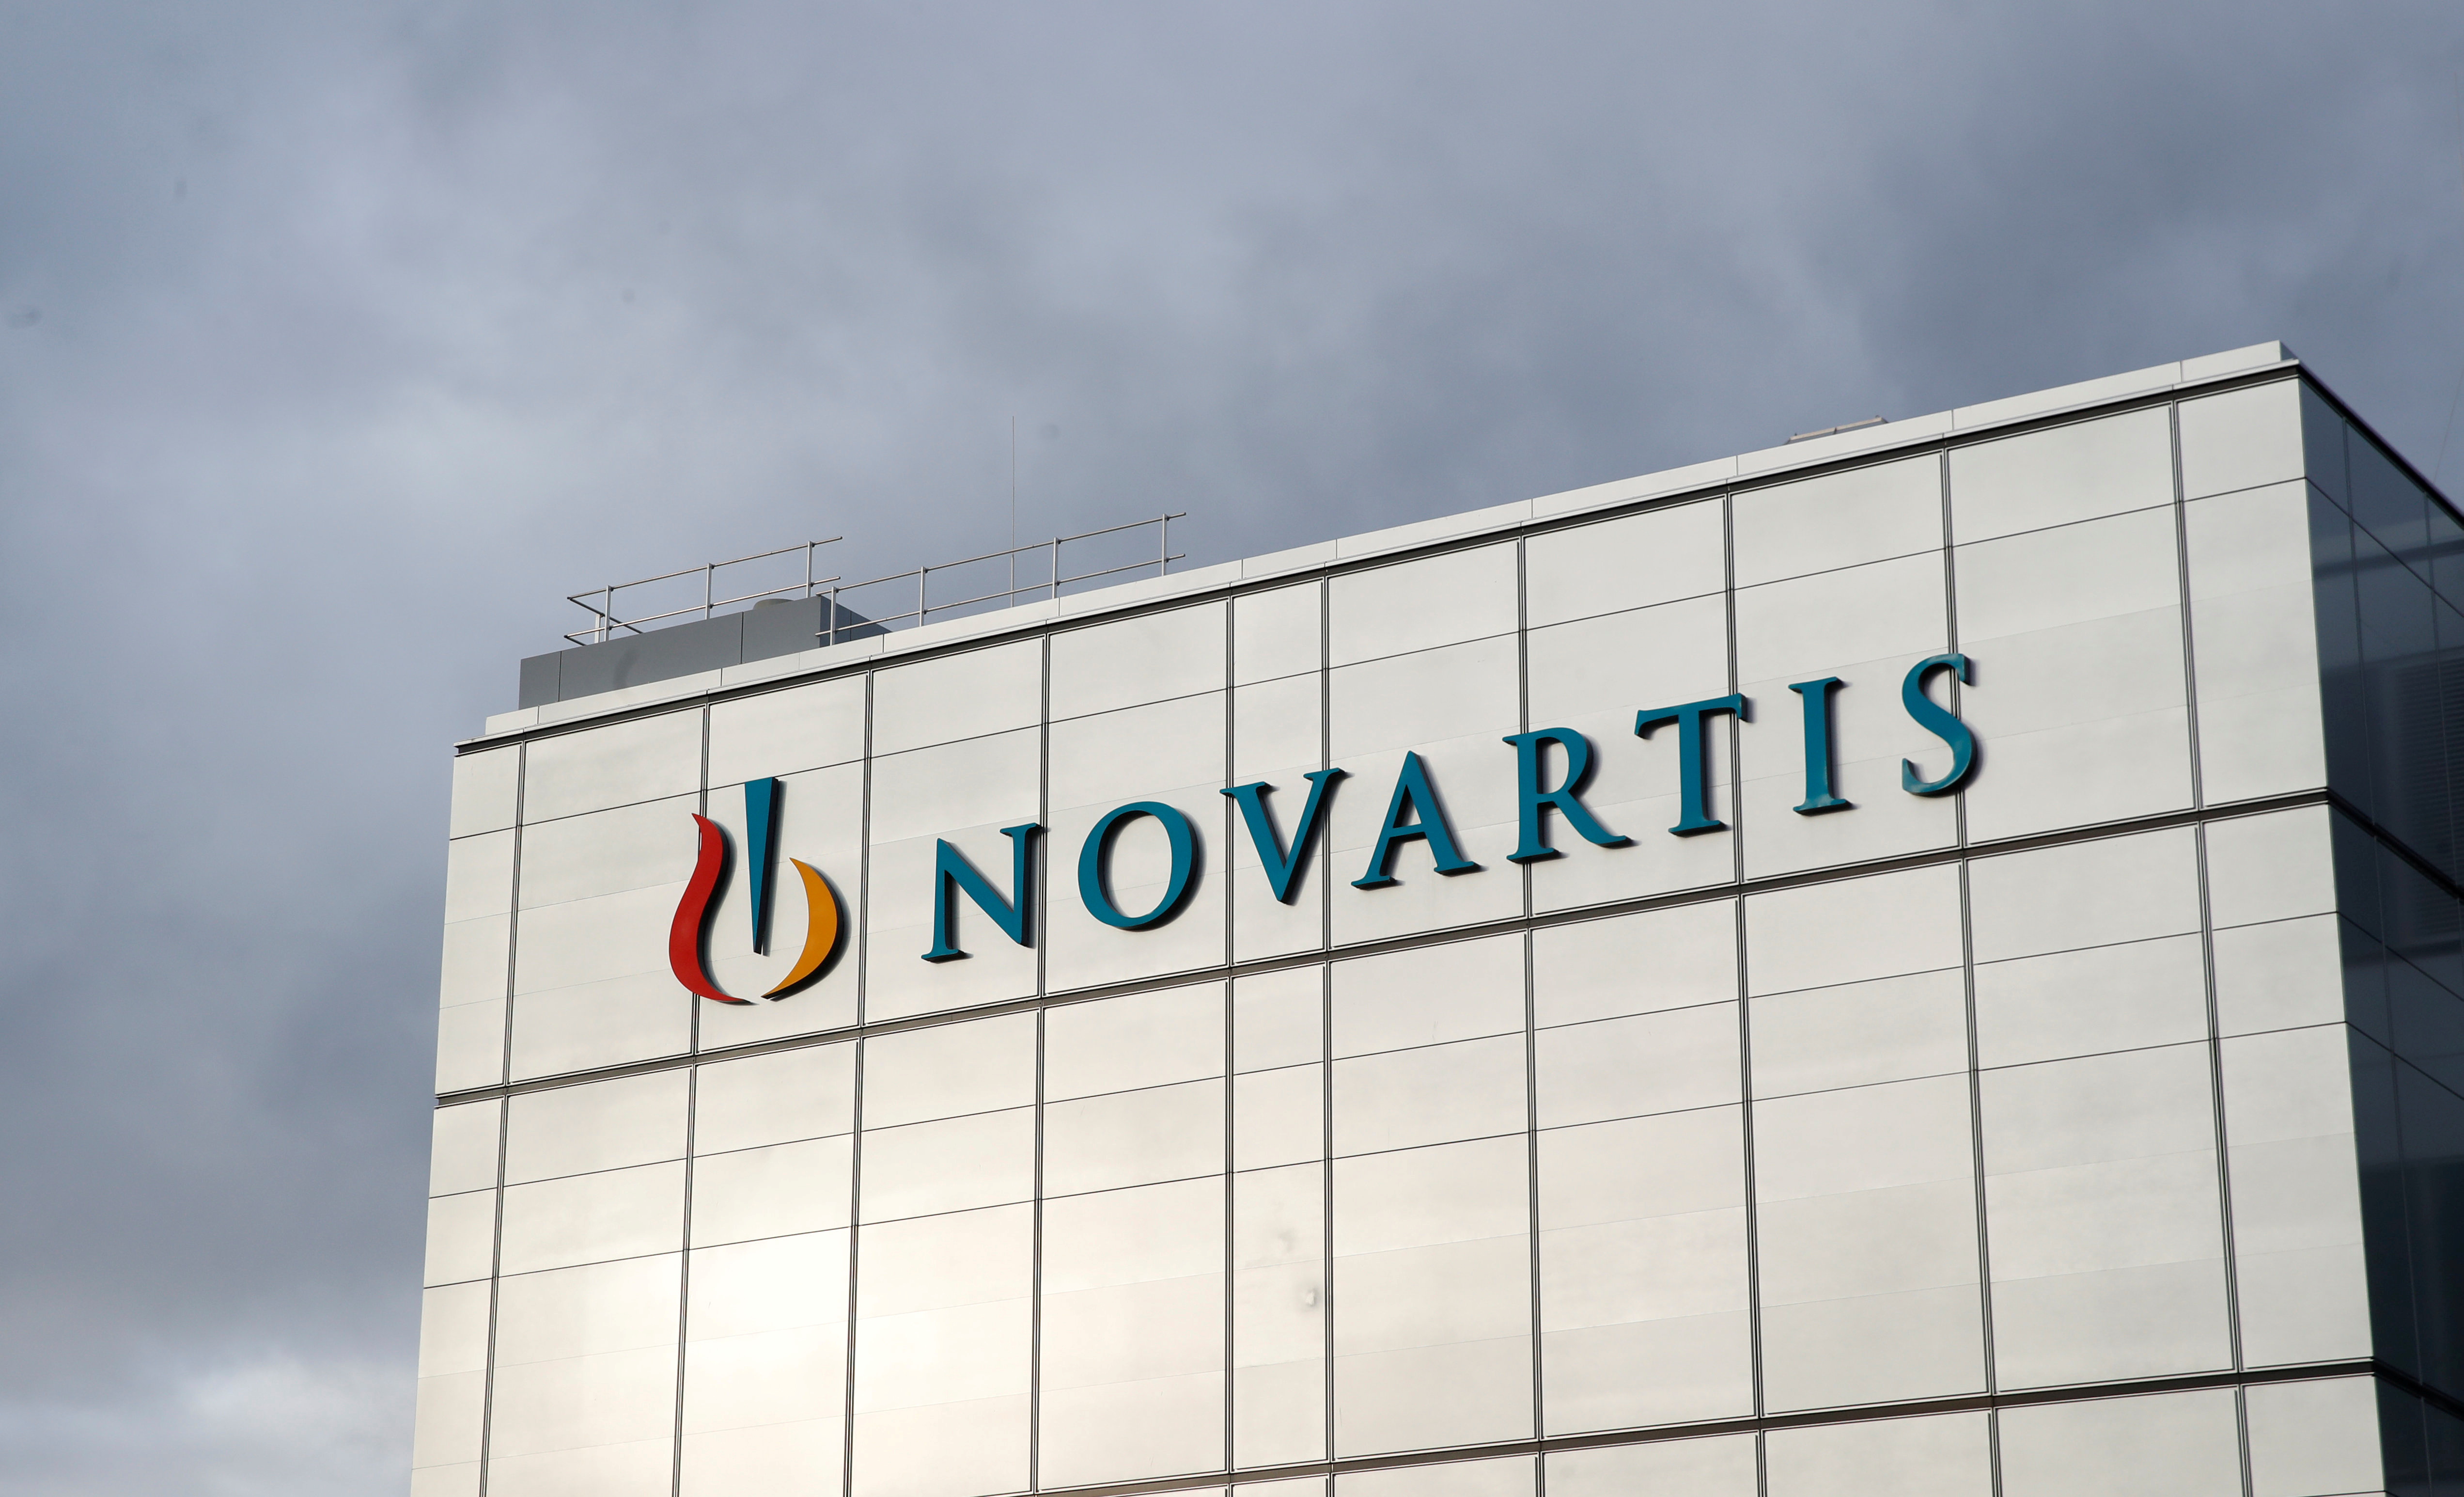 Novartis to pay $245 mln to end antitrust cases over Exforge drug generics